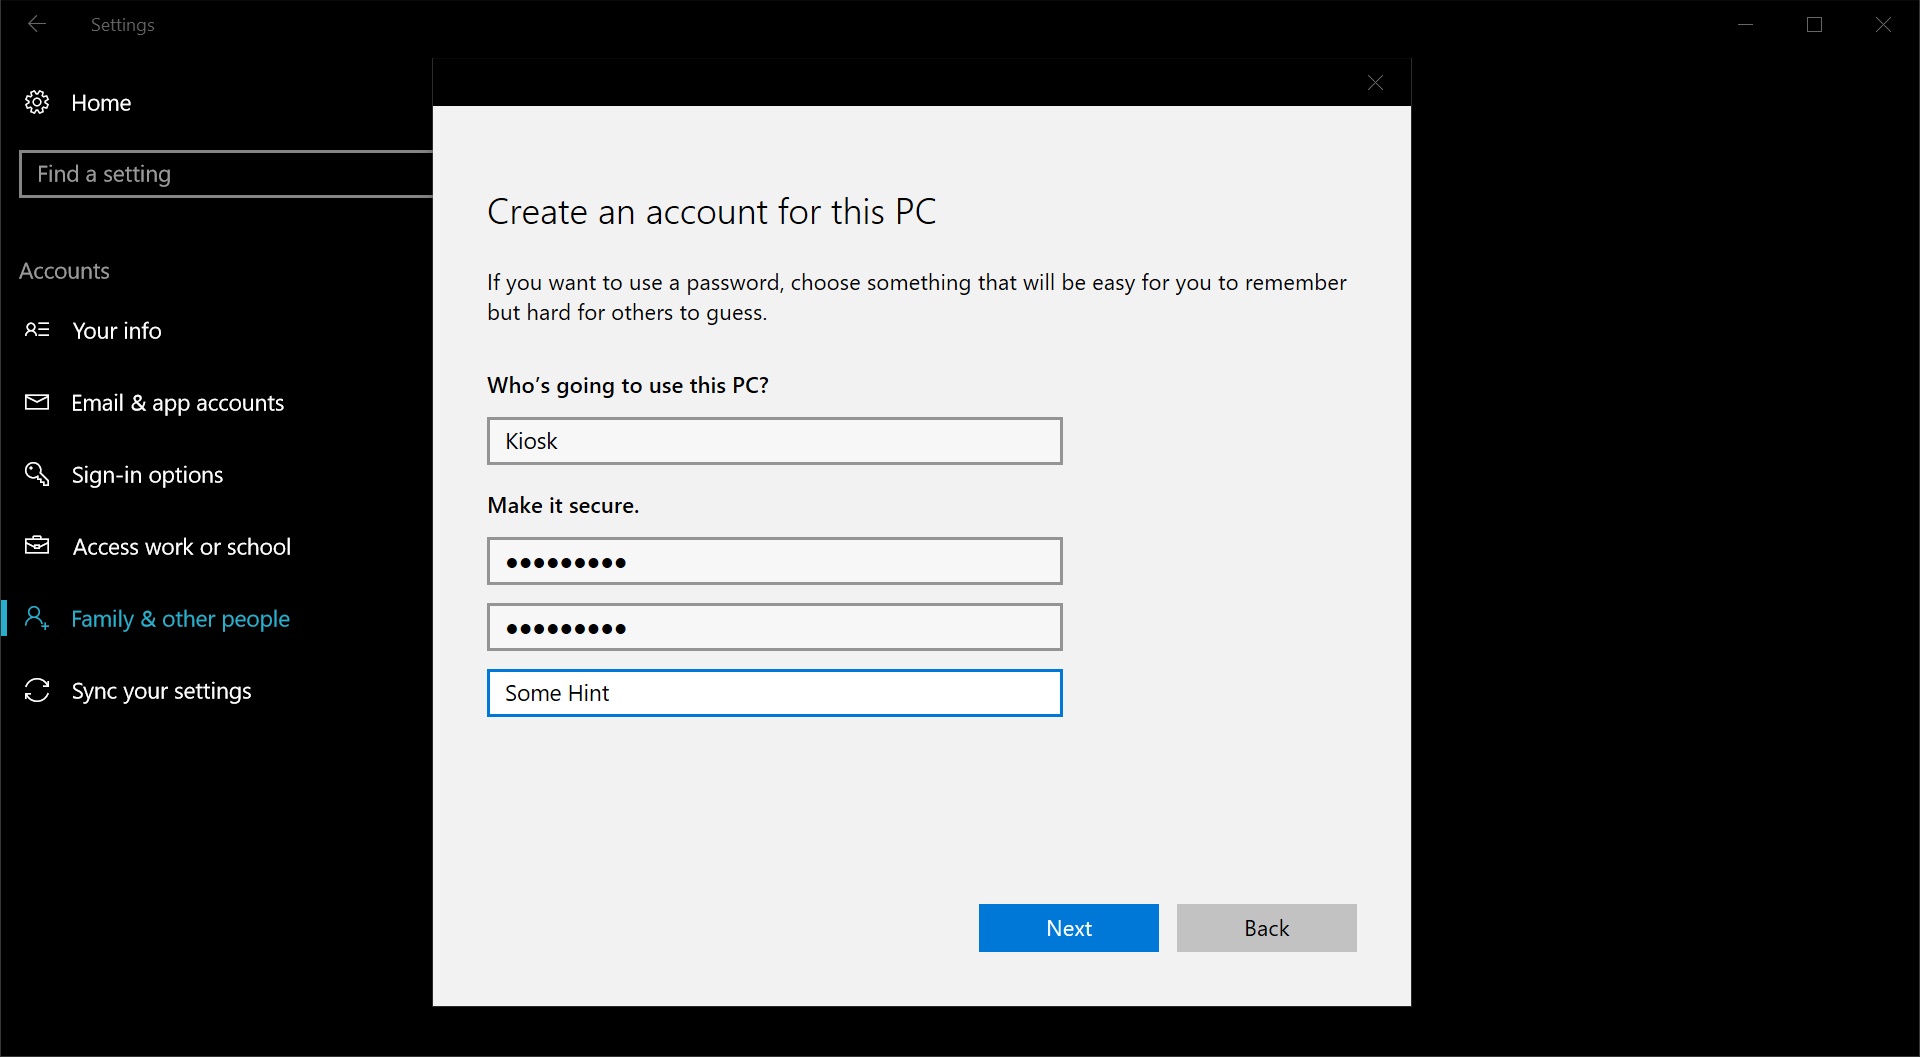 Create an account on this Windows 10 PC